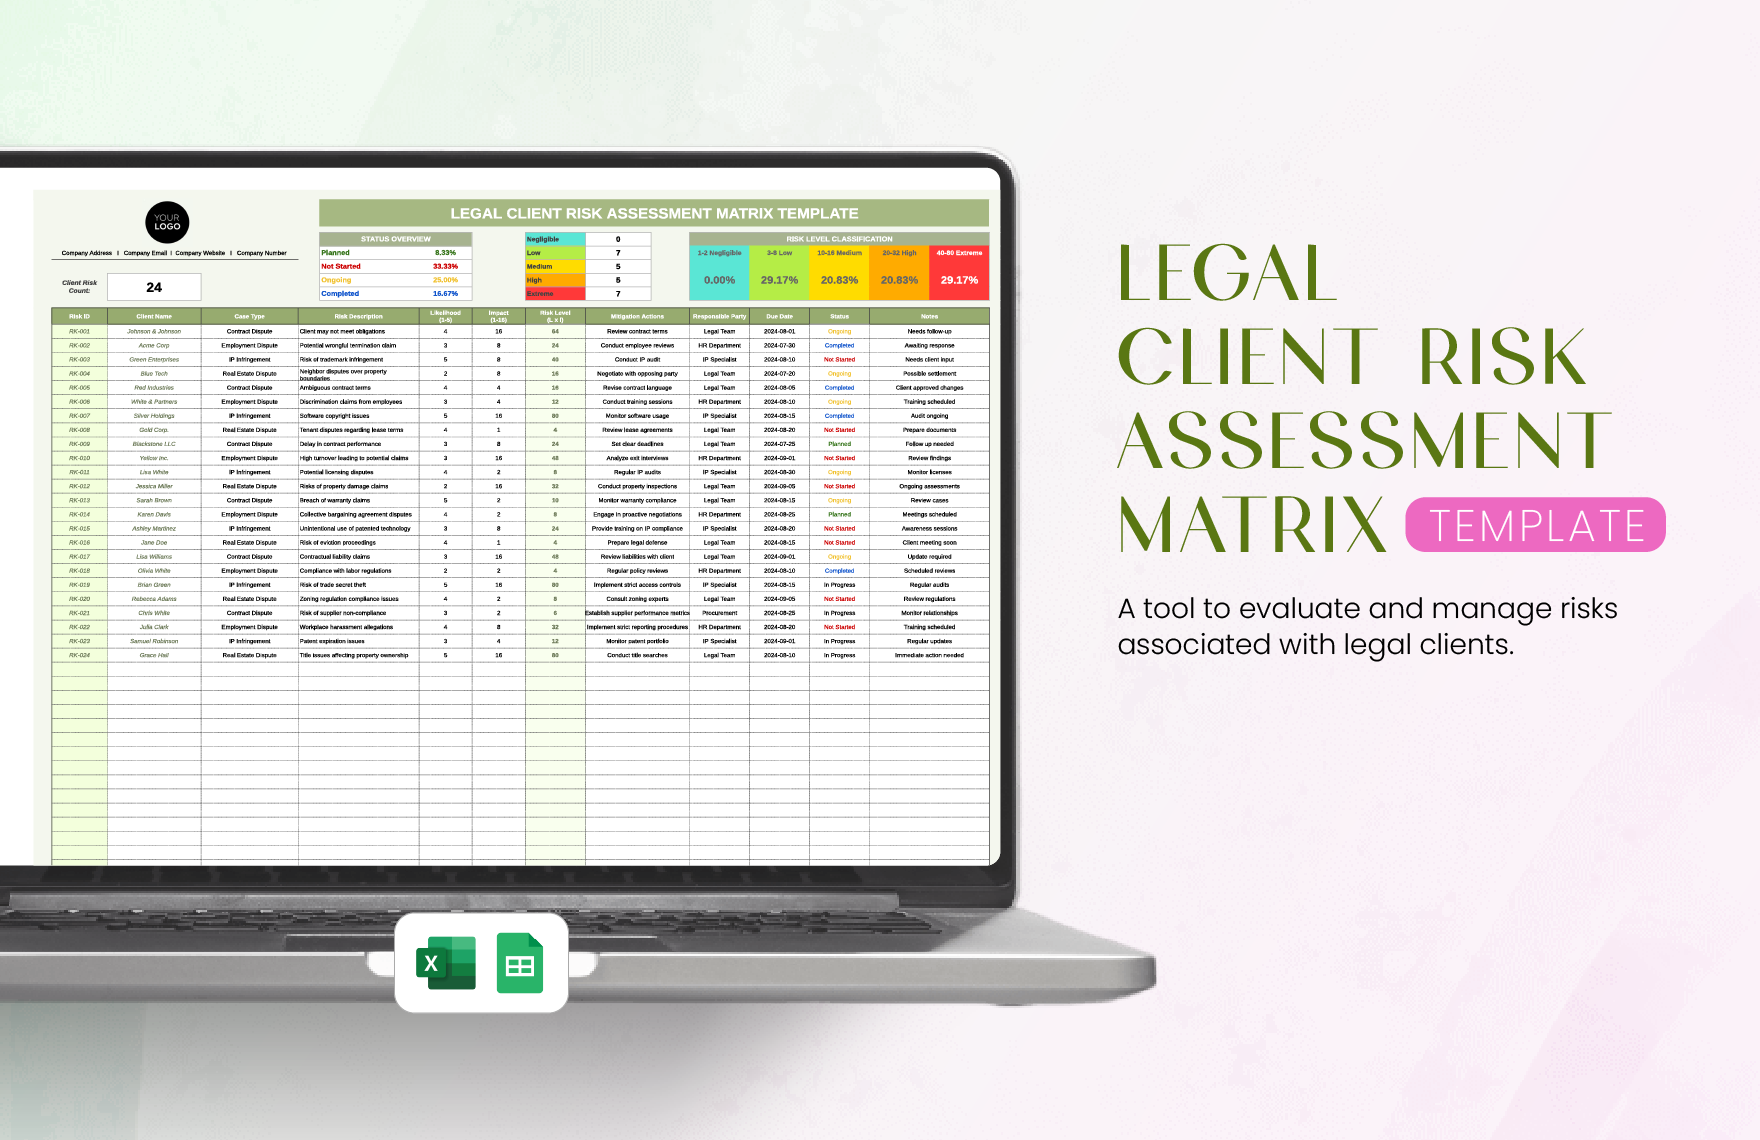 Legal Client Risk Assessment Matrix Template in Excel, Google Sheets